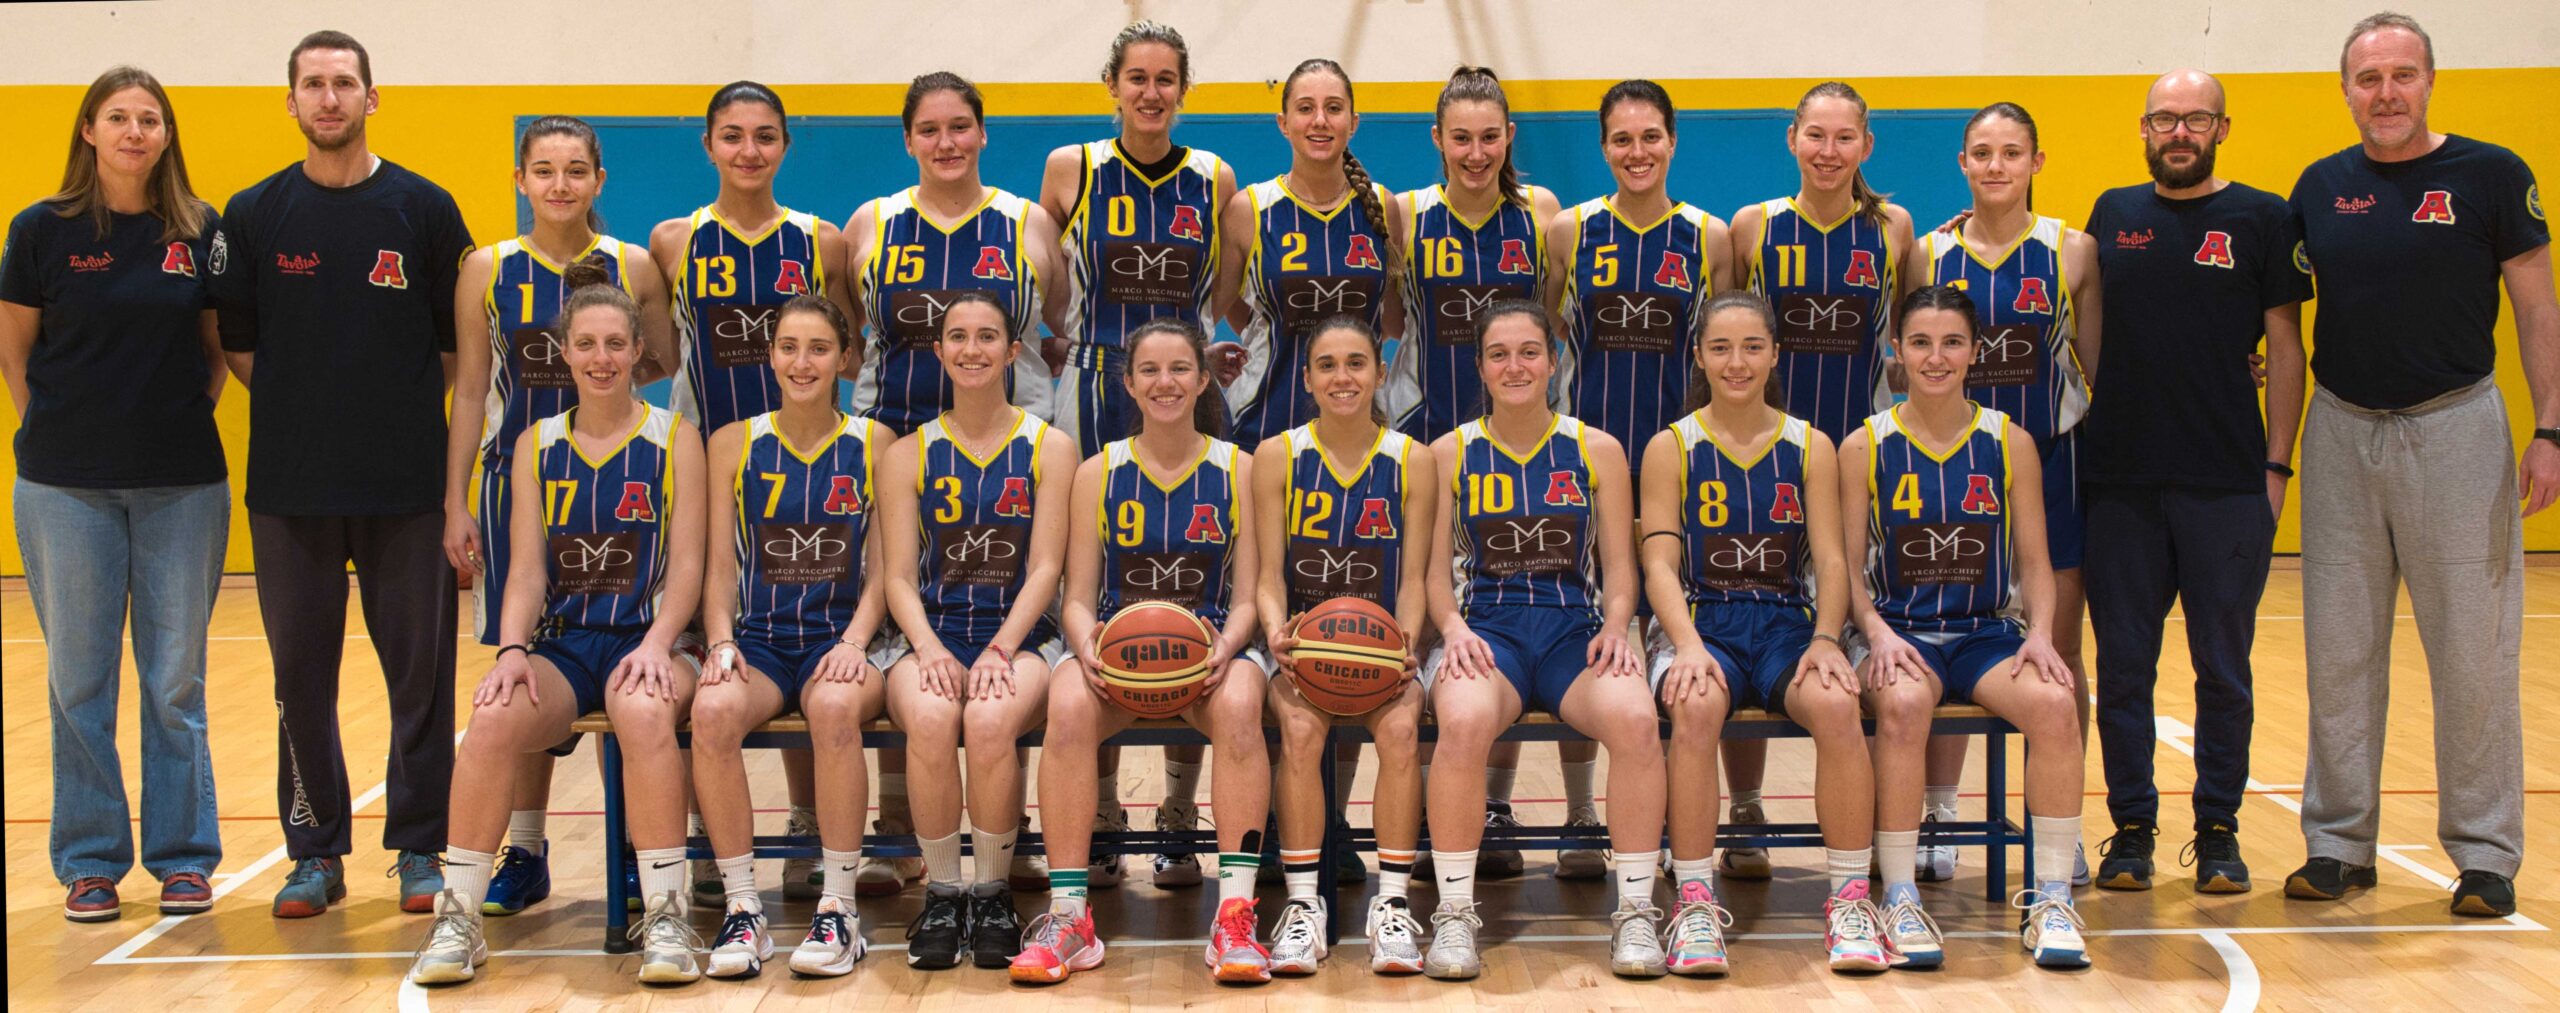 serie B femminile: AreaPro 2020 ospita Novara Basket. Presentazione partita